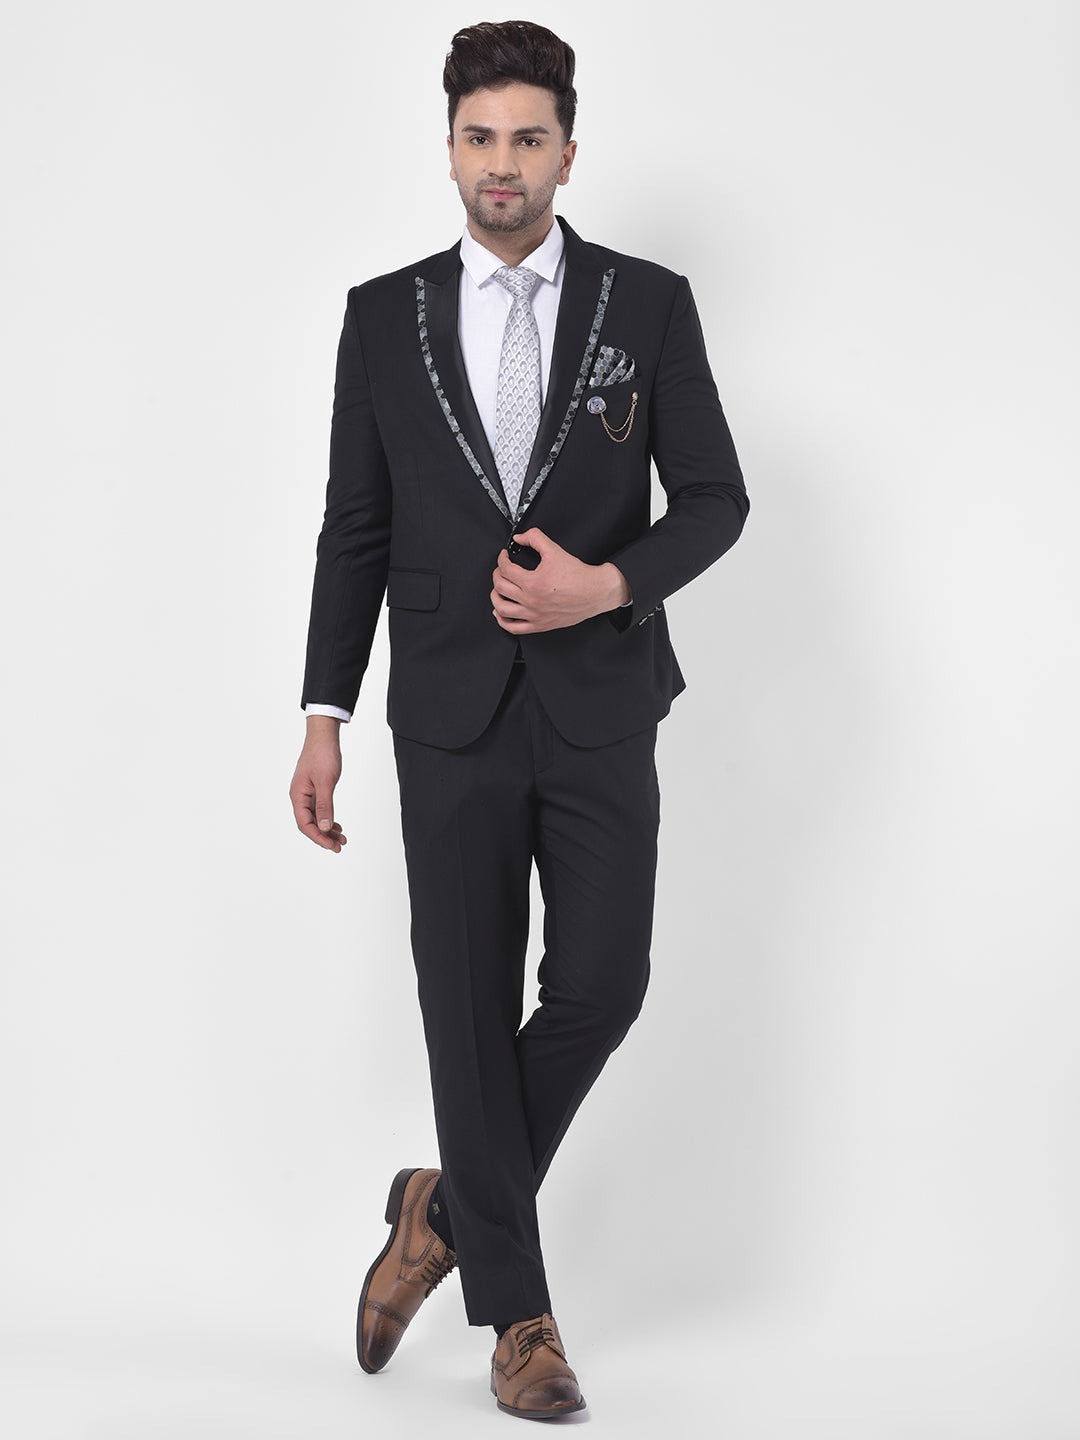 Men 2 Piece Suit Black Tuxedo Suit Perfect for Wedding One Button Suits,  Tuxedo Suits, Dinner Suits, Wedding Groom Suits, Bespoke for Men - Etsy